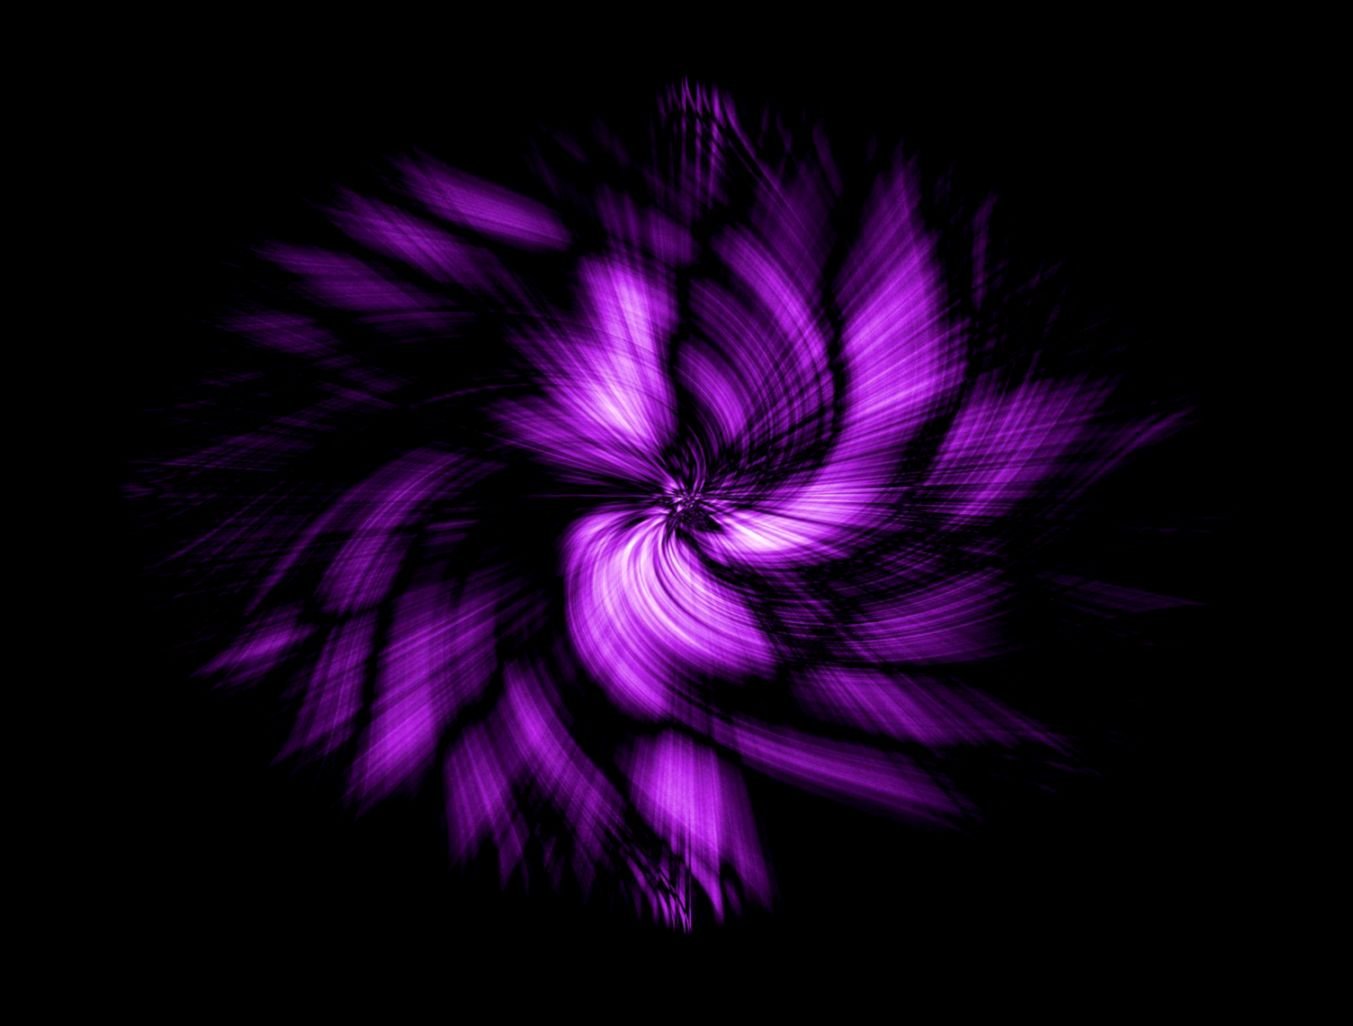 fond wallpaper,violet,purple,black,fractal art,darkness